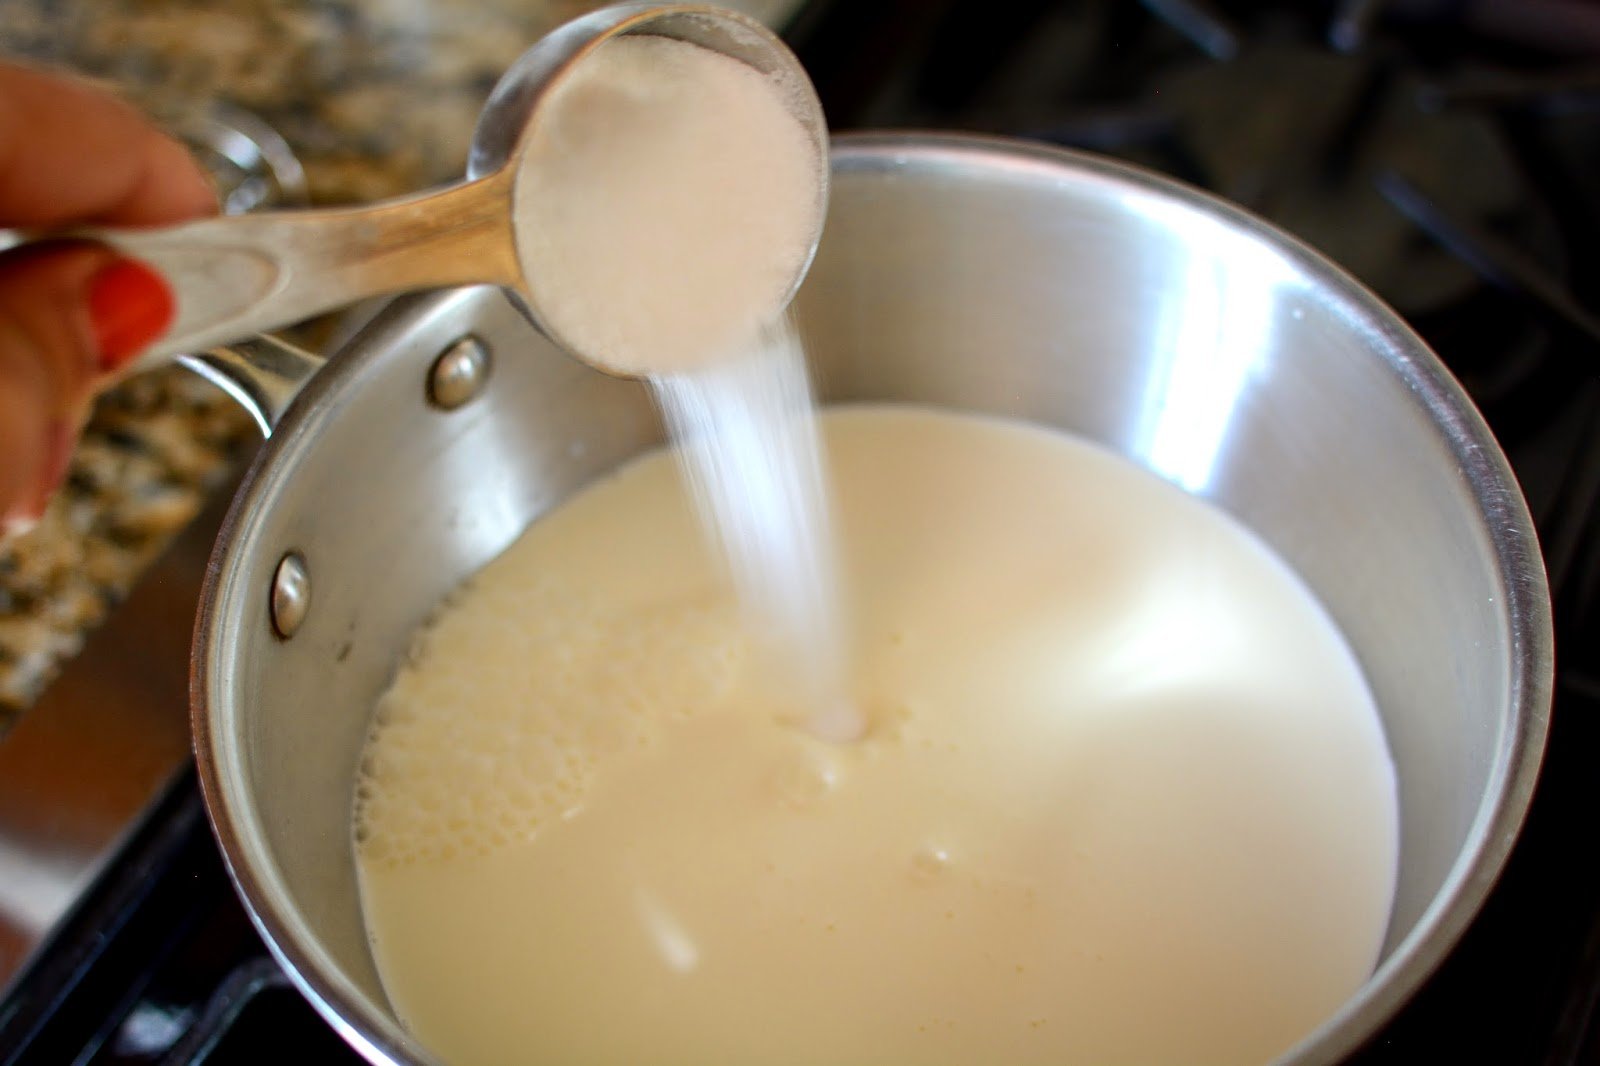 Add sugar to milk in a metal nbowl.